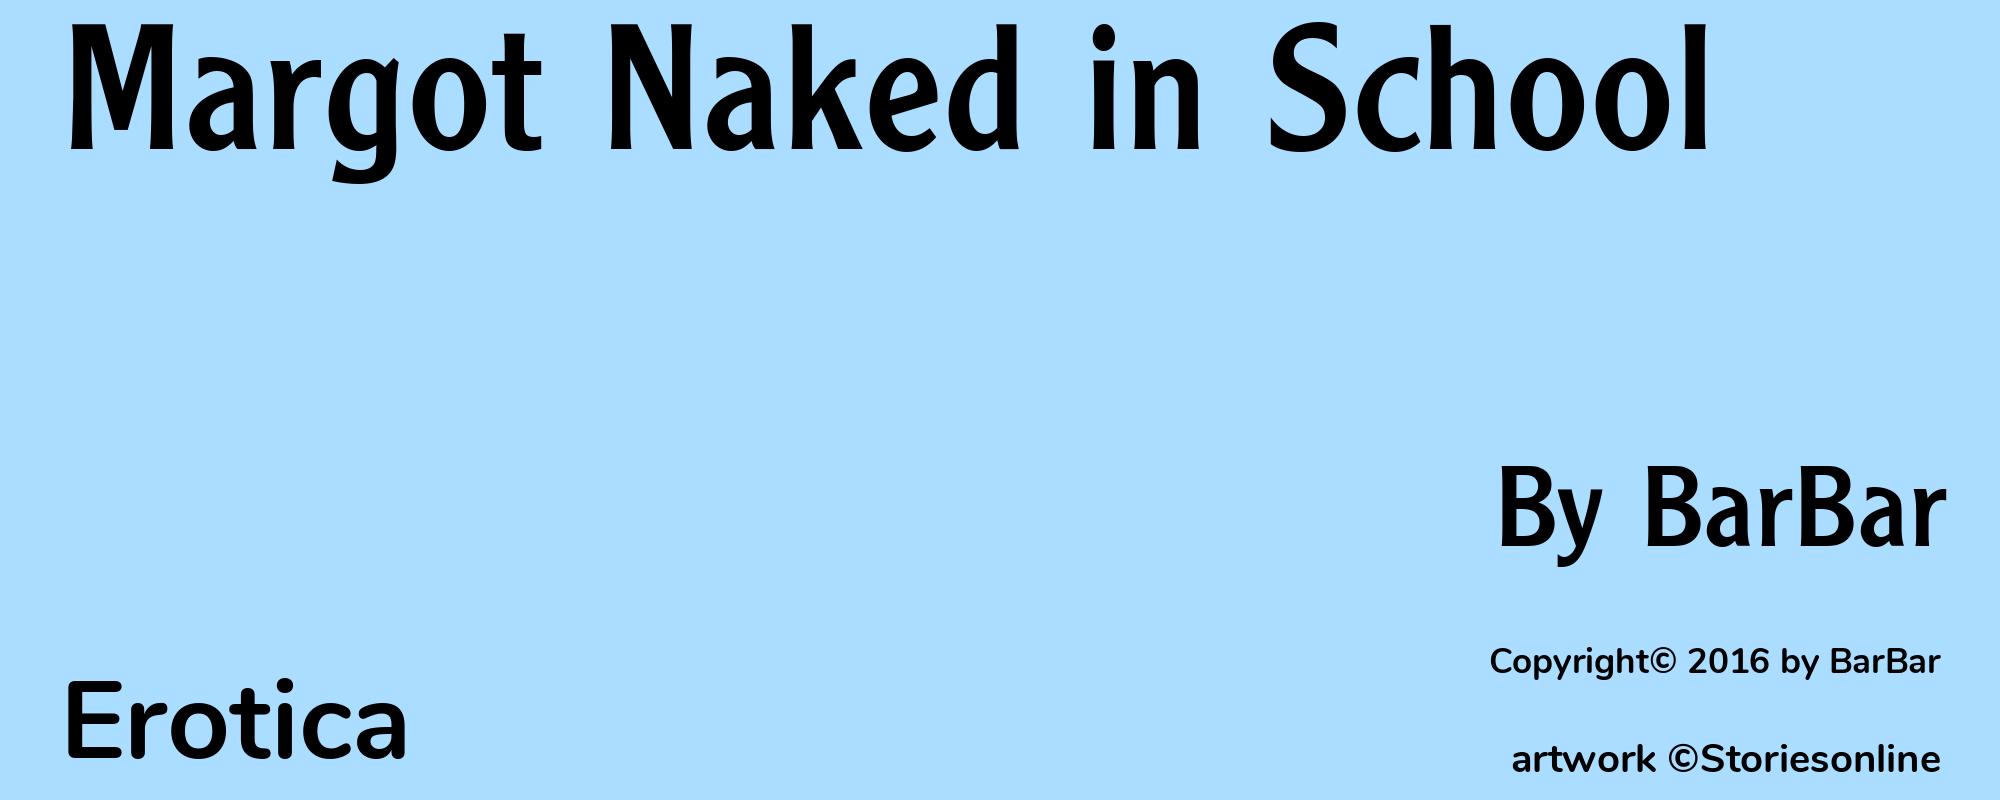 Margot Naked in School - Cover